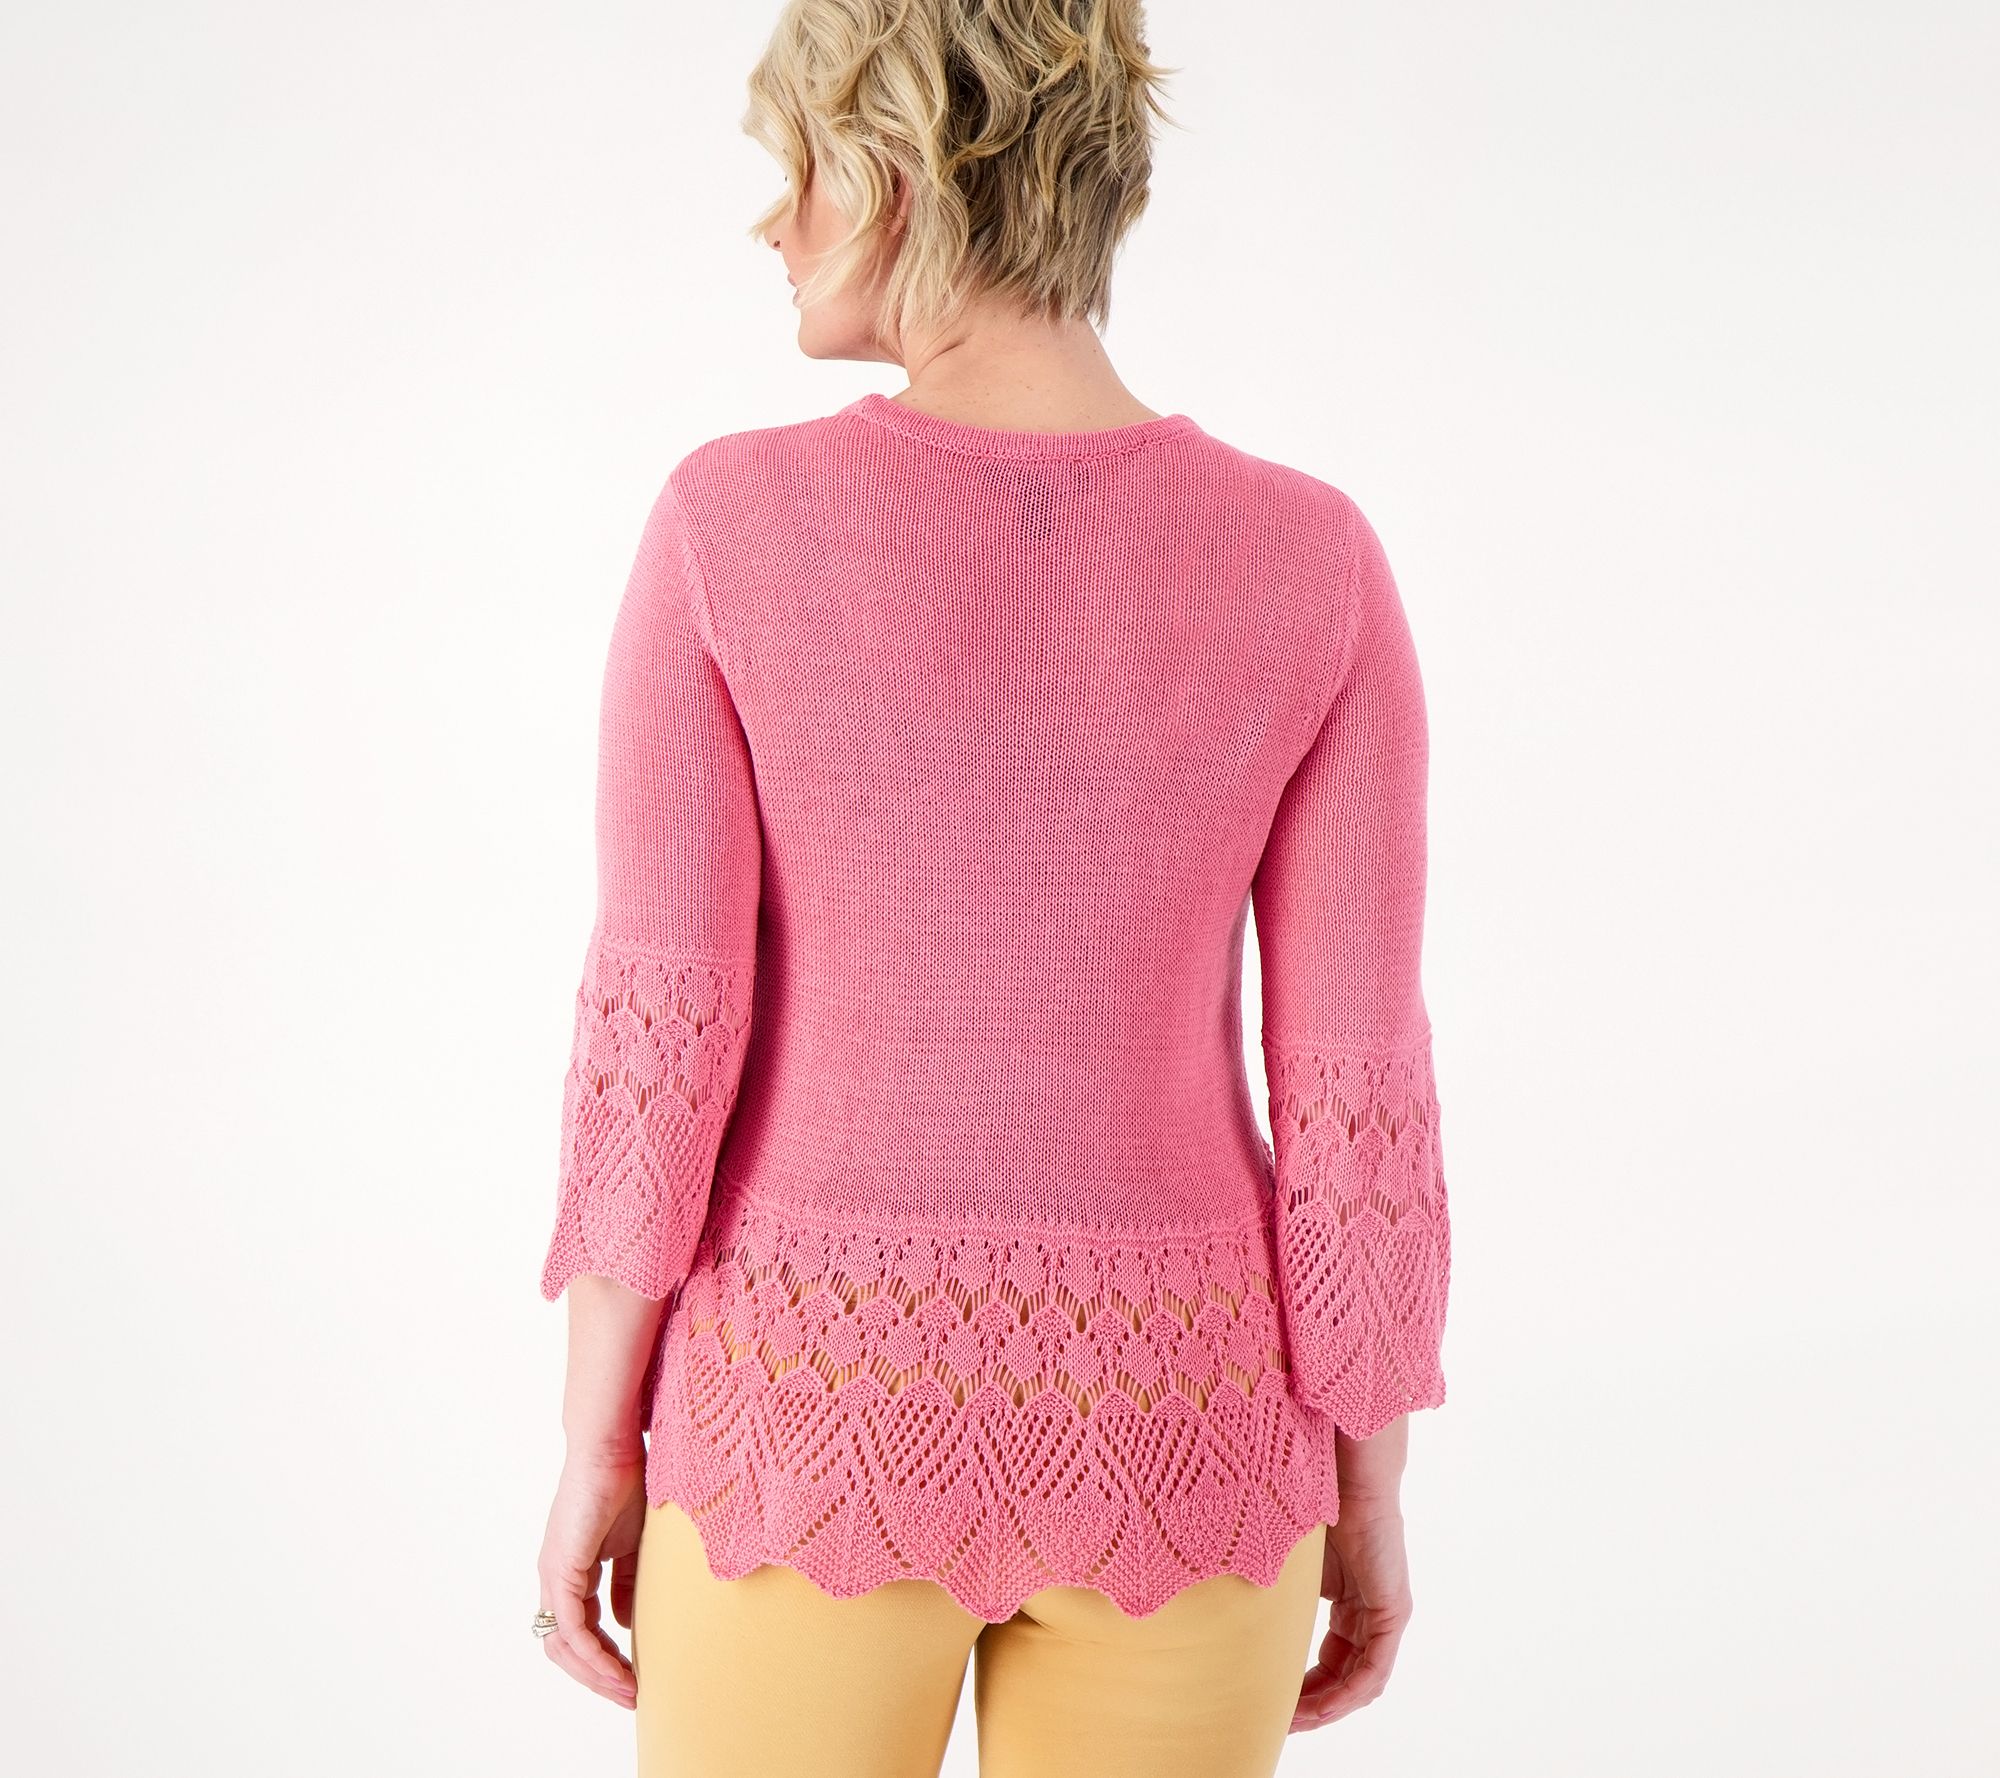 Attitudes by Renee Crochet Sweater